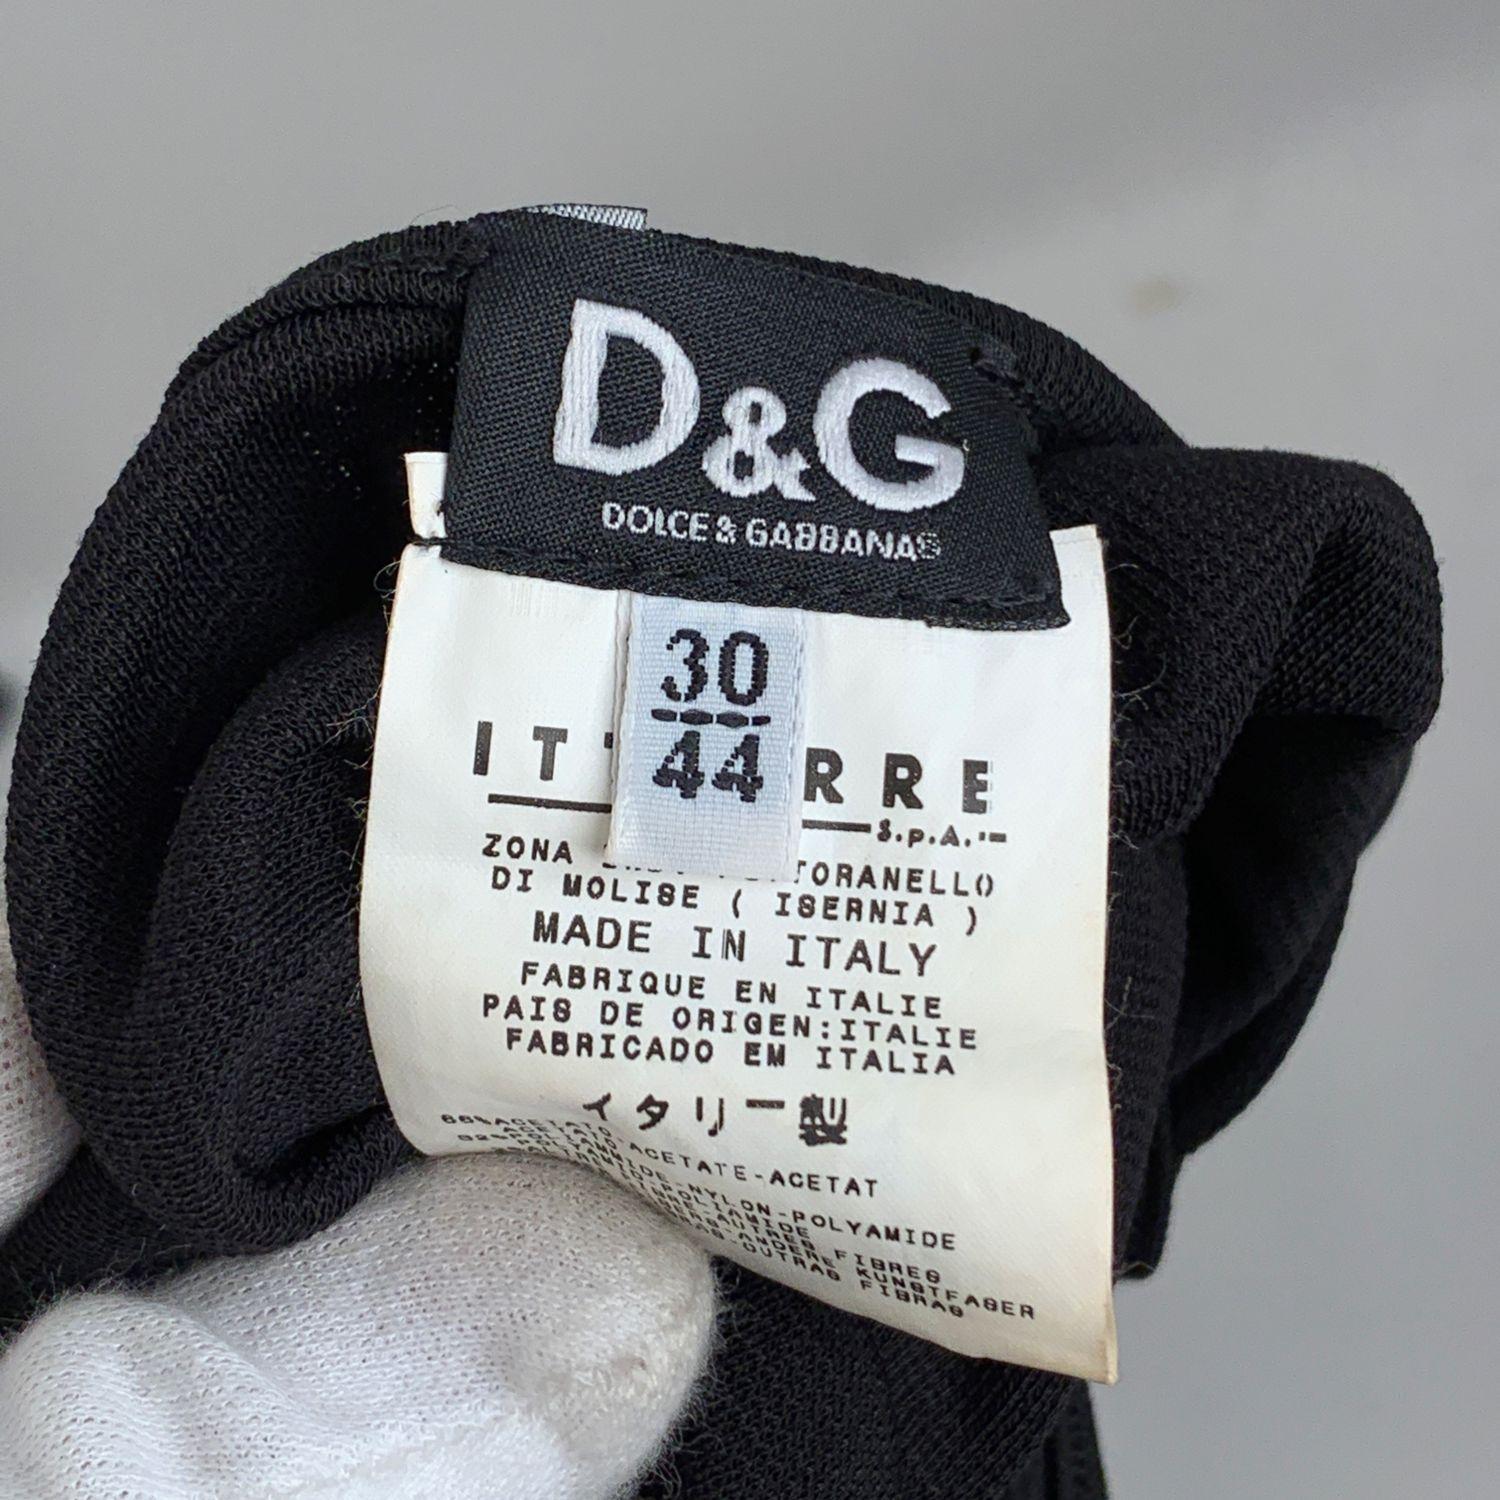 D&G Dolce & Gabbana Black Bodycon Dress with Crisscross Detail Size 44 2